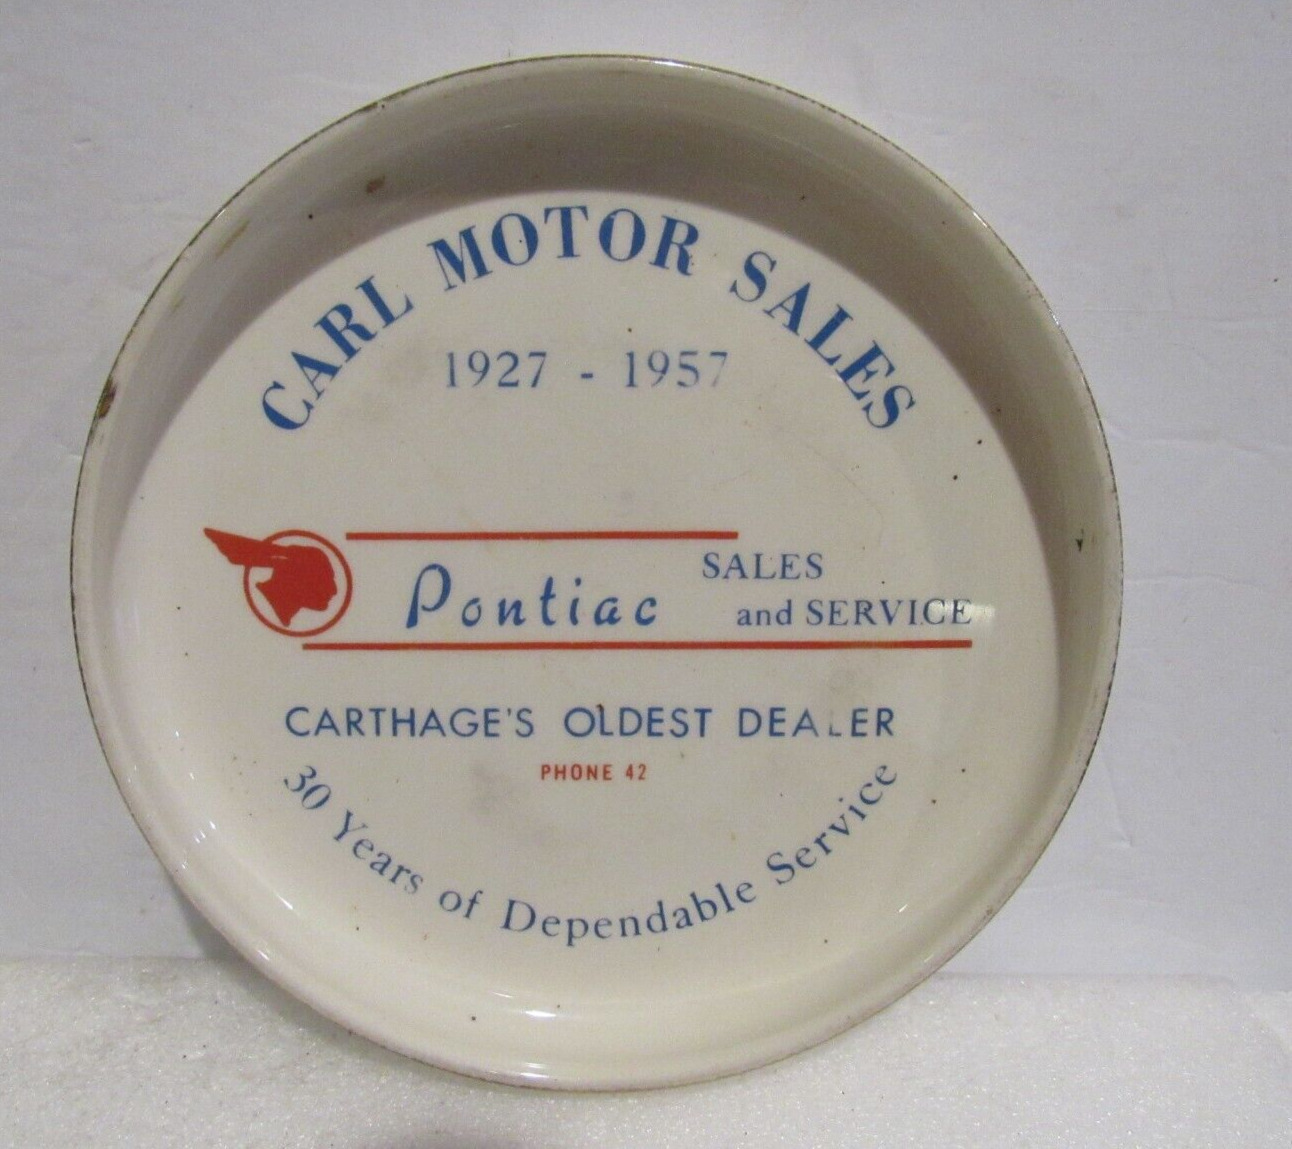 Vintage Ashtray Carl Motor Sales Pontiac 27-57 Carthage Two Digit Phone Ceramic